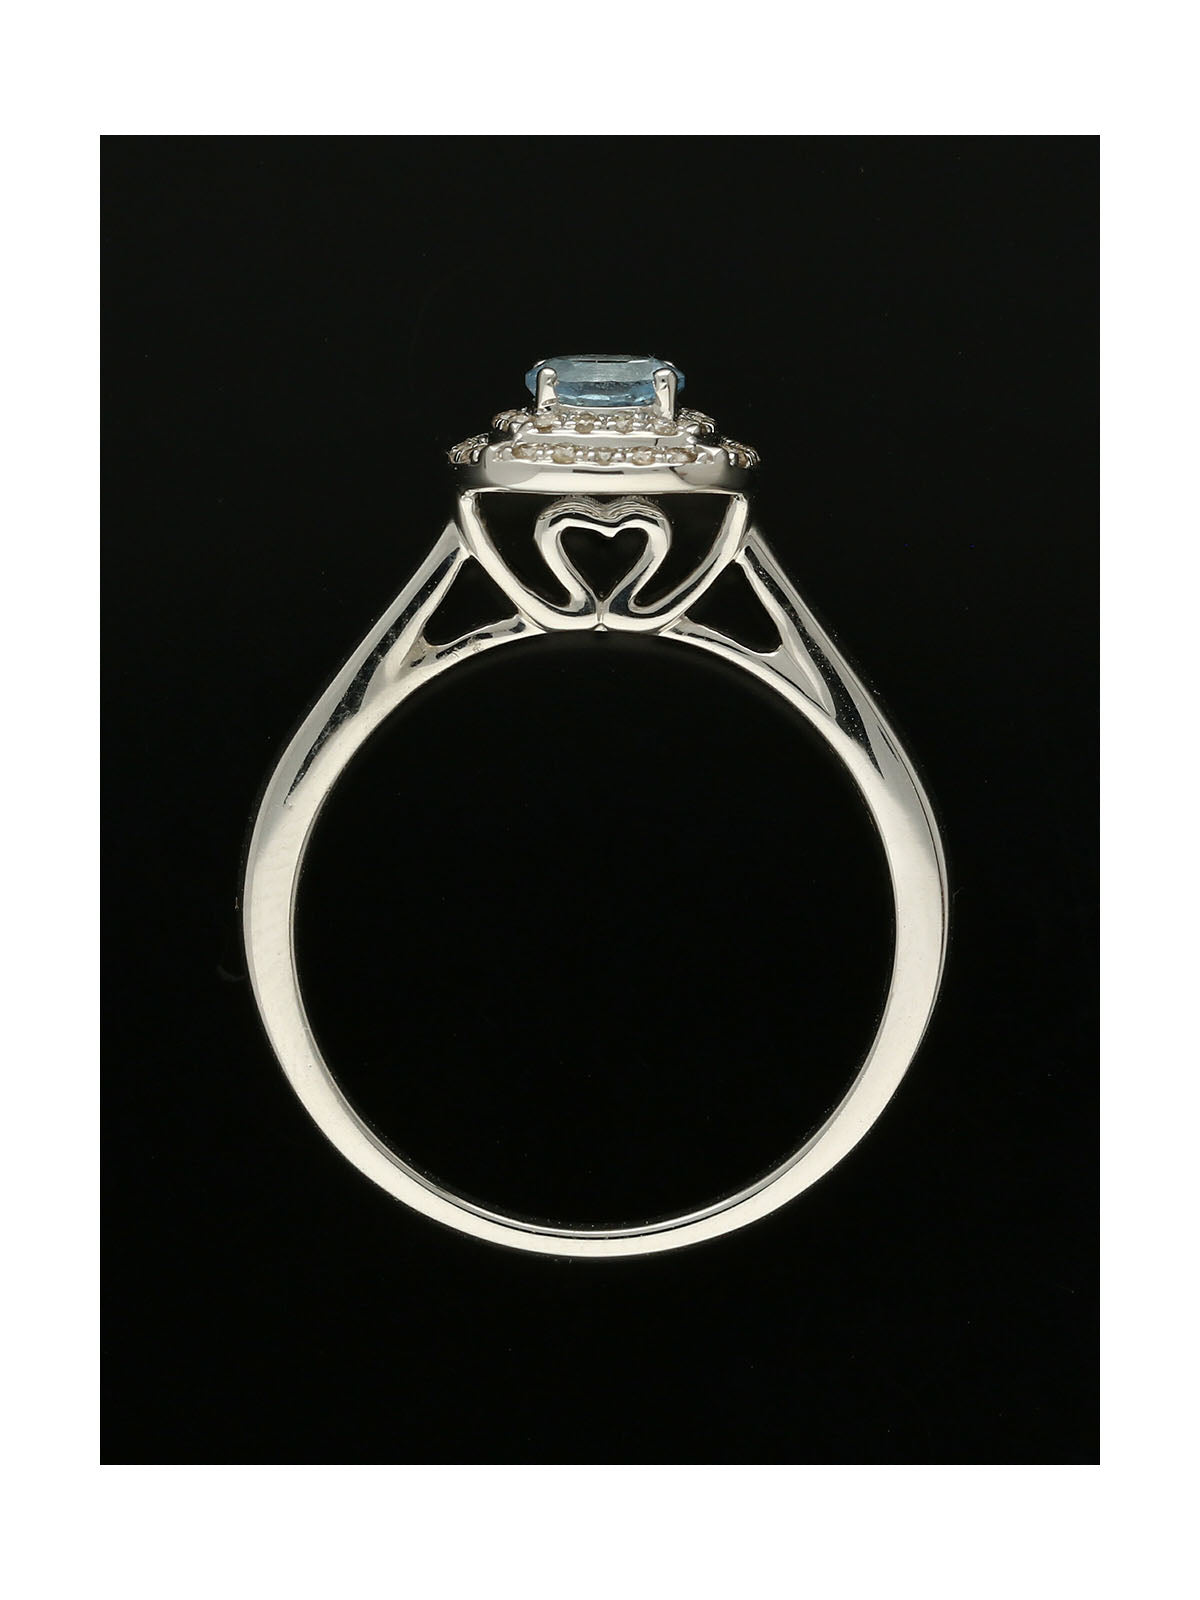 Aquamarine & Diamond Double Halo Ring in 9ct White Gold